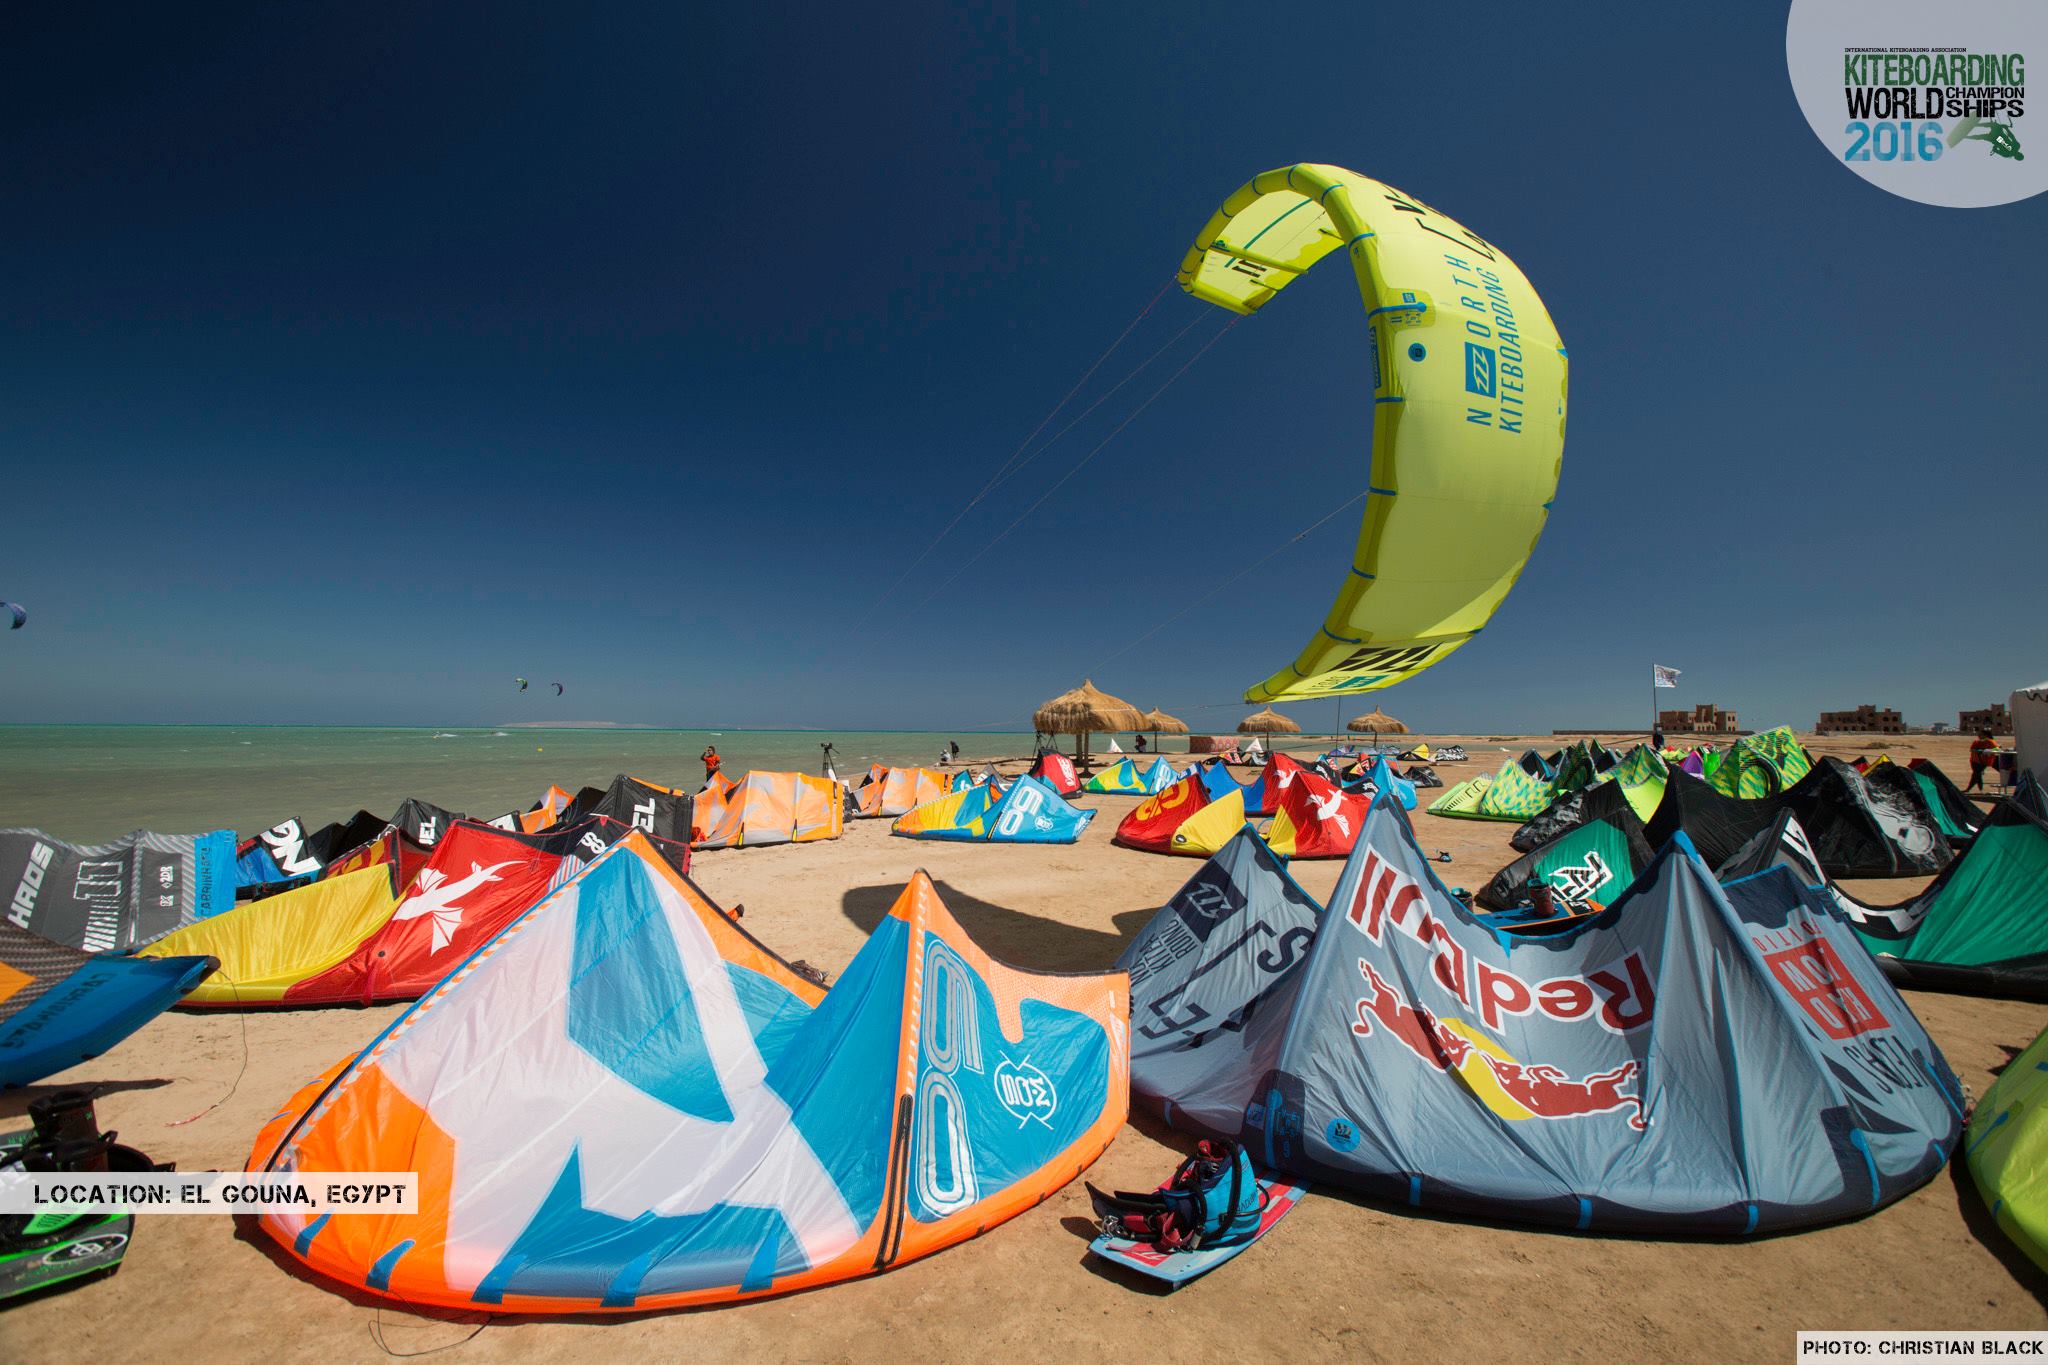  Kite Boarding  World Championship 2016, Round 1  El Gouna EGY  Day 3